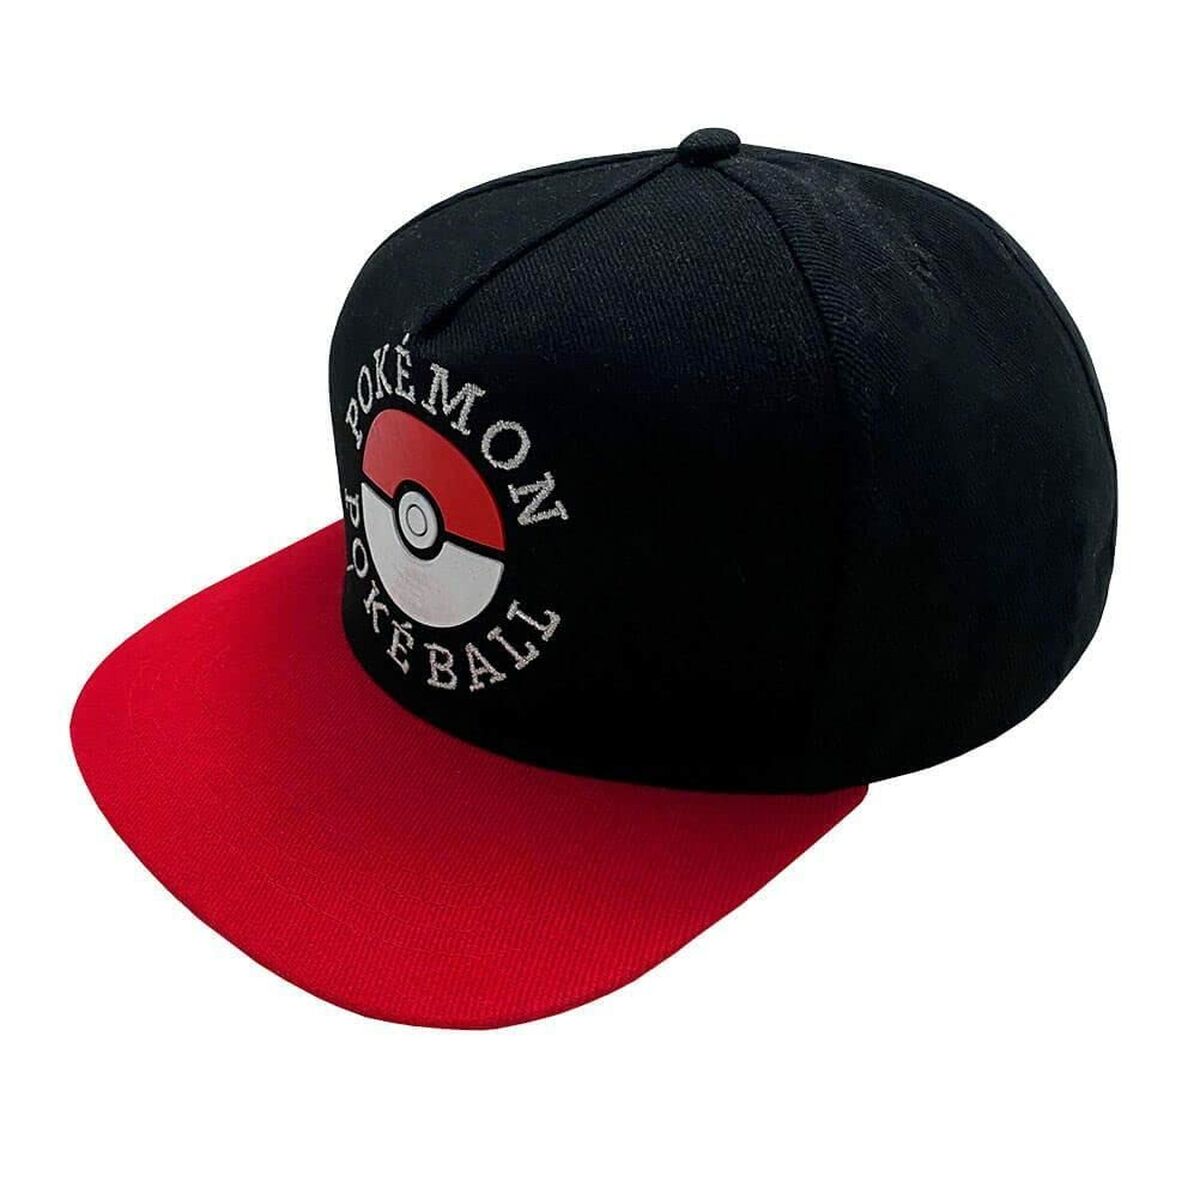 Unisex hat Pokémon Trainer 58 cm Black Red One size